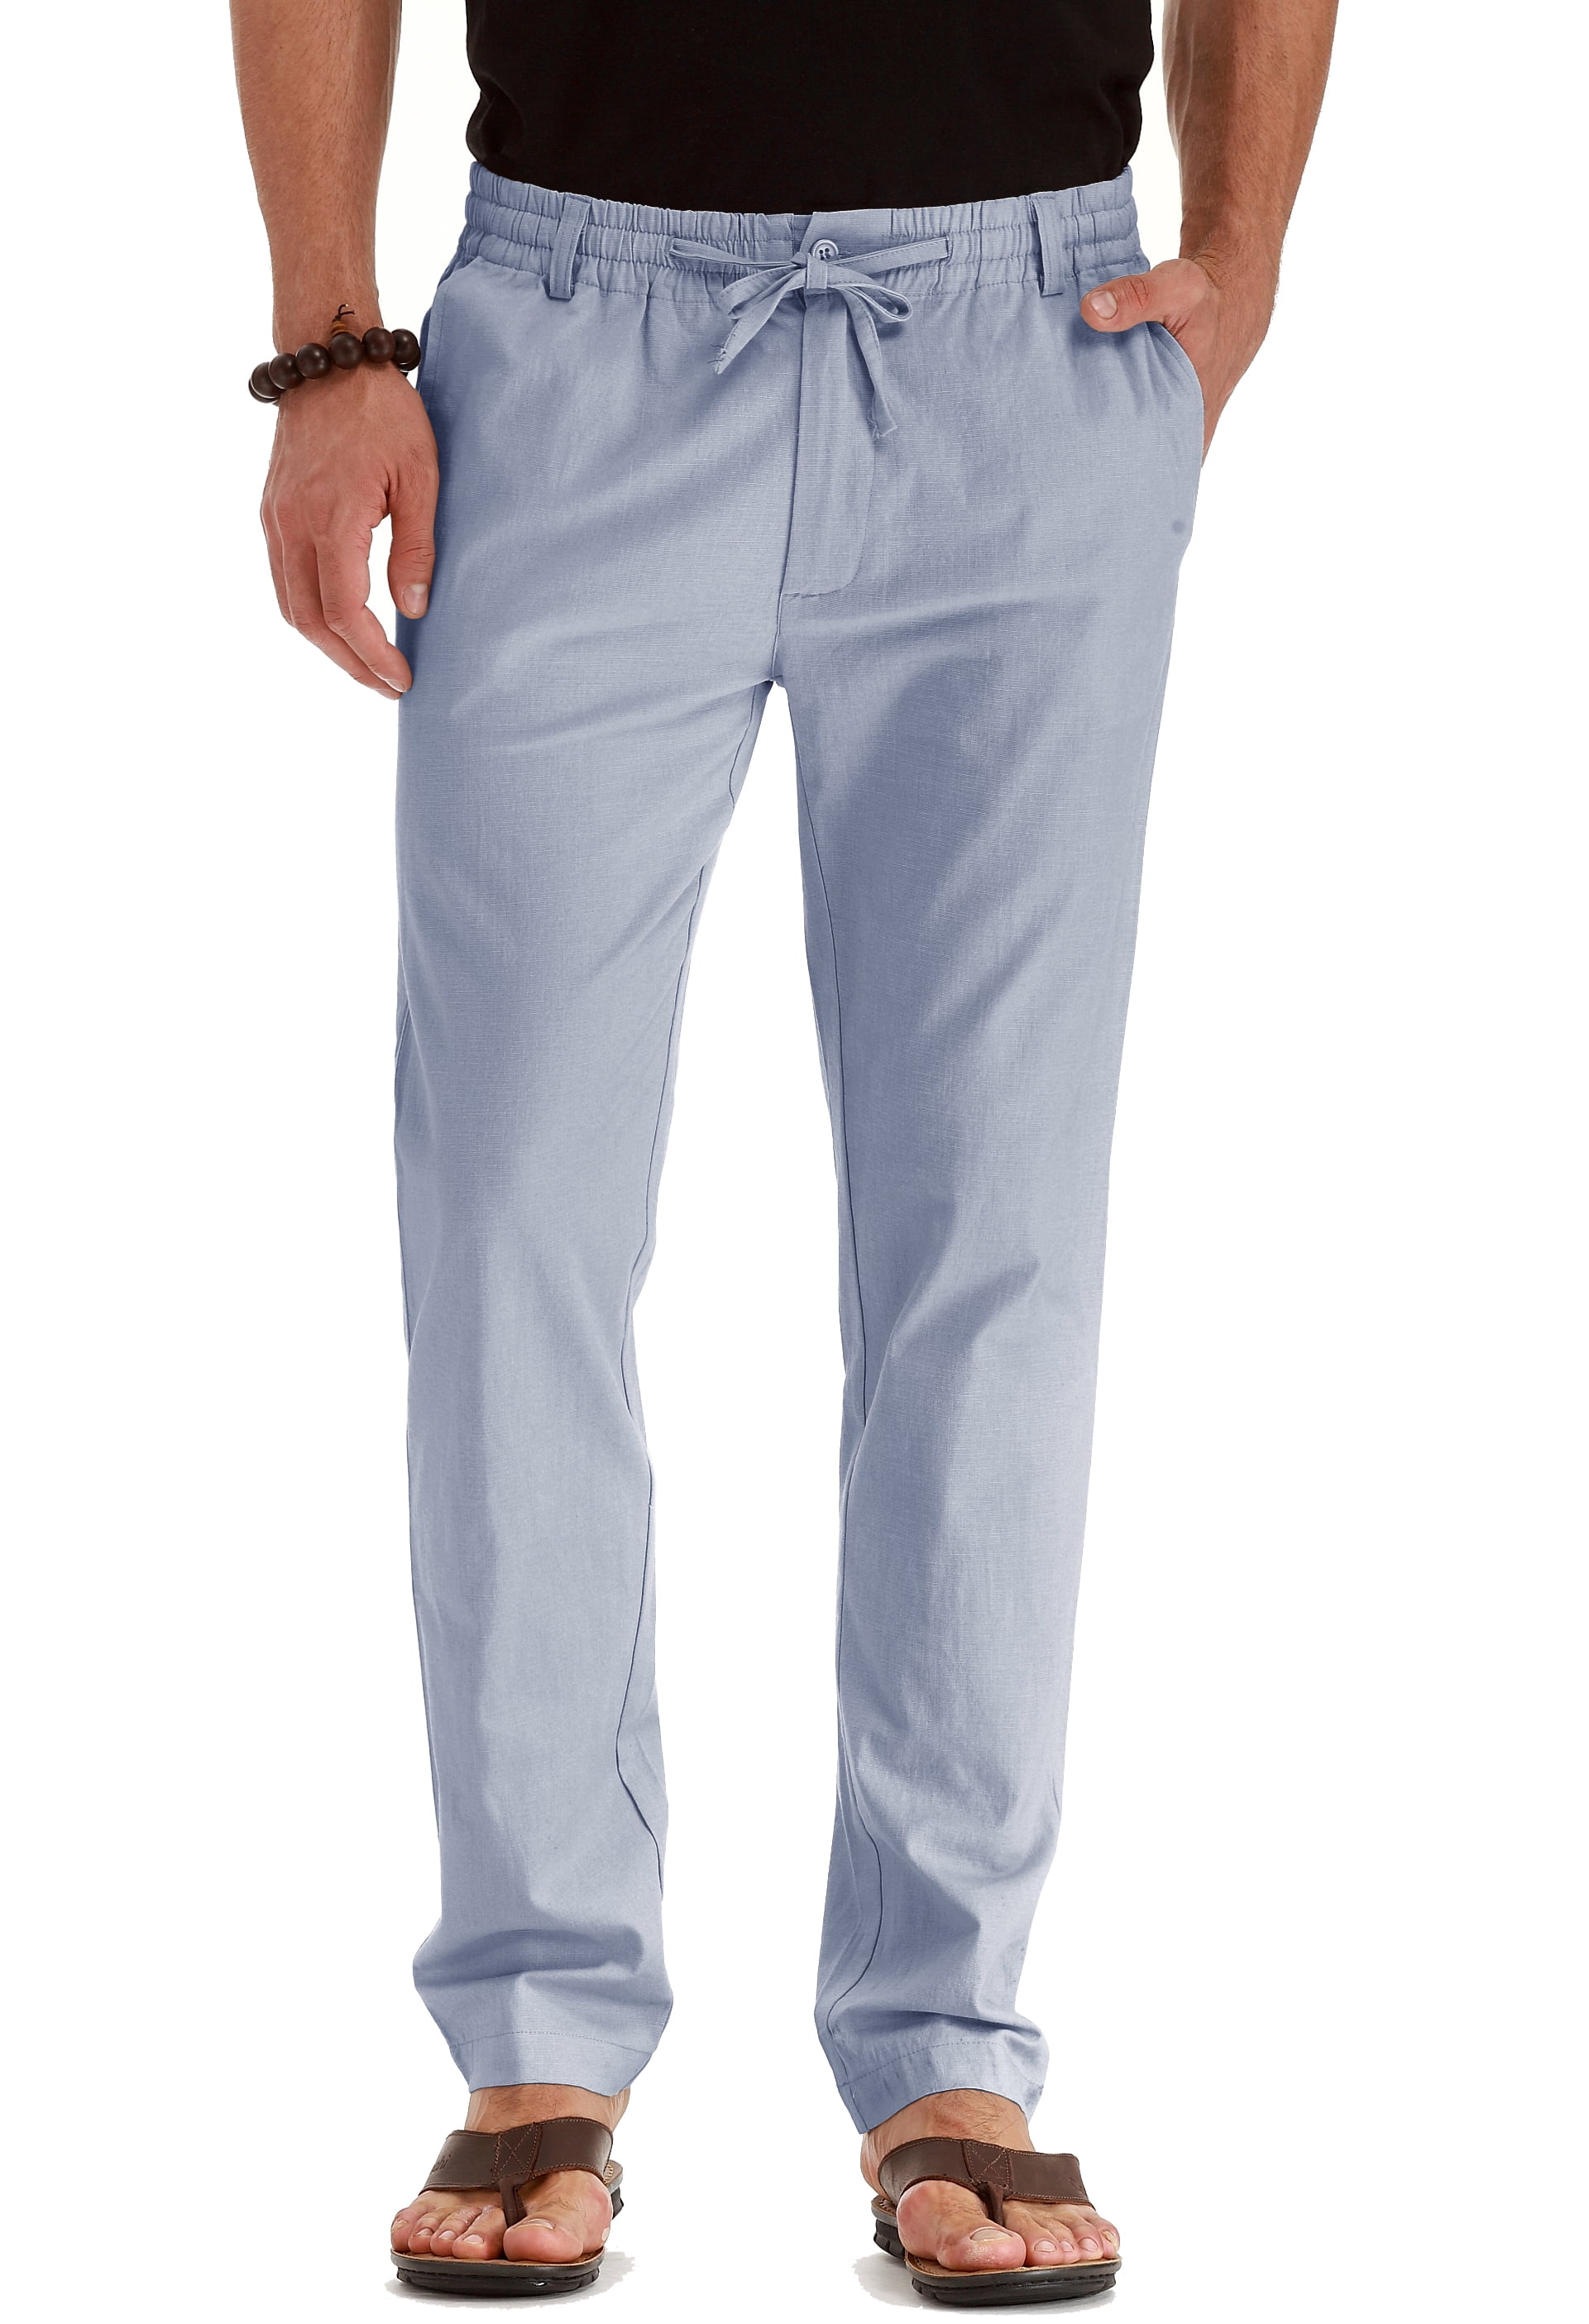 JWD Men's Cotton Linen Pants Elastic Waist Drawstring Casual Trouser  Lightweight Straight-Legs Loose Beach Yoga Pants Navy Blue-US 40 